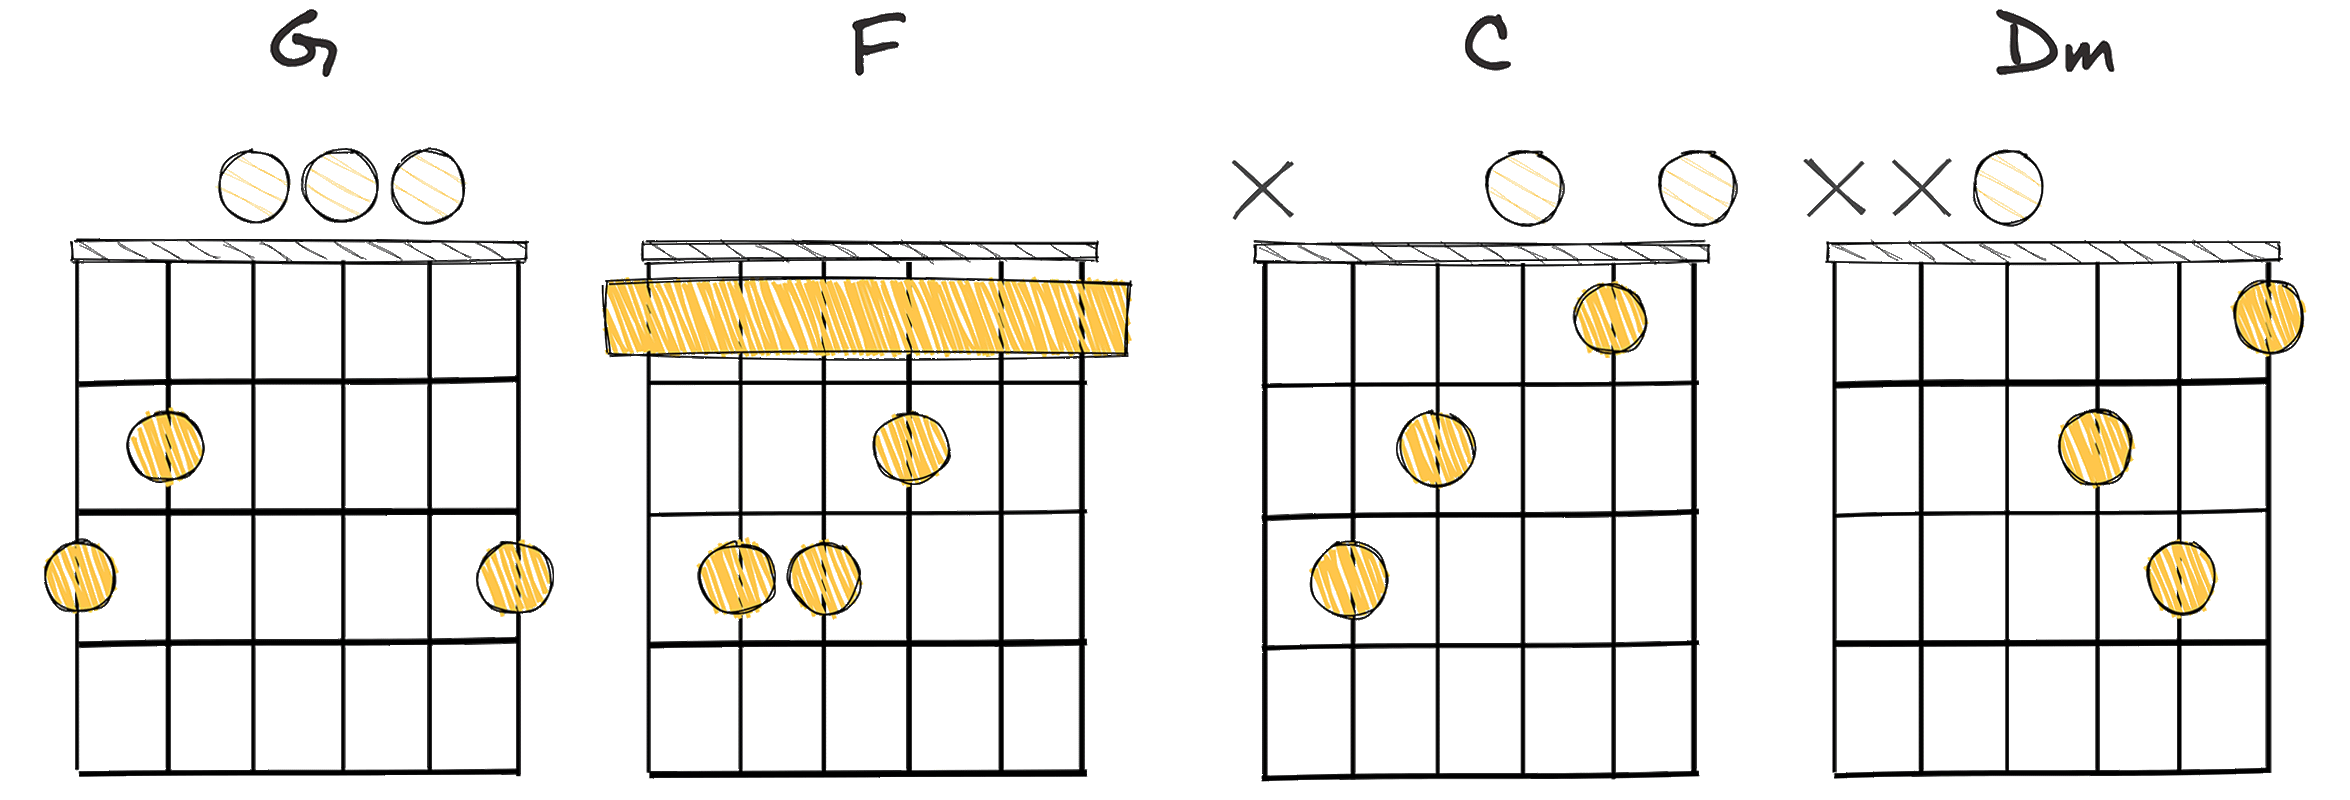 V - IV - I - ii (5-4-1-2) chords diagram